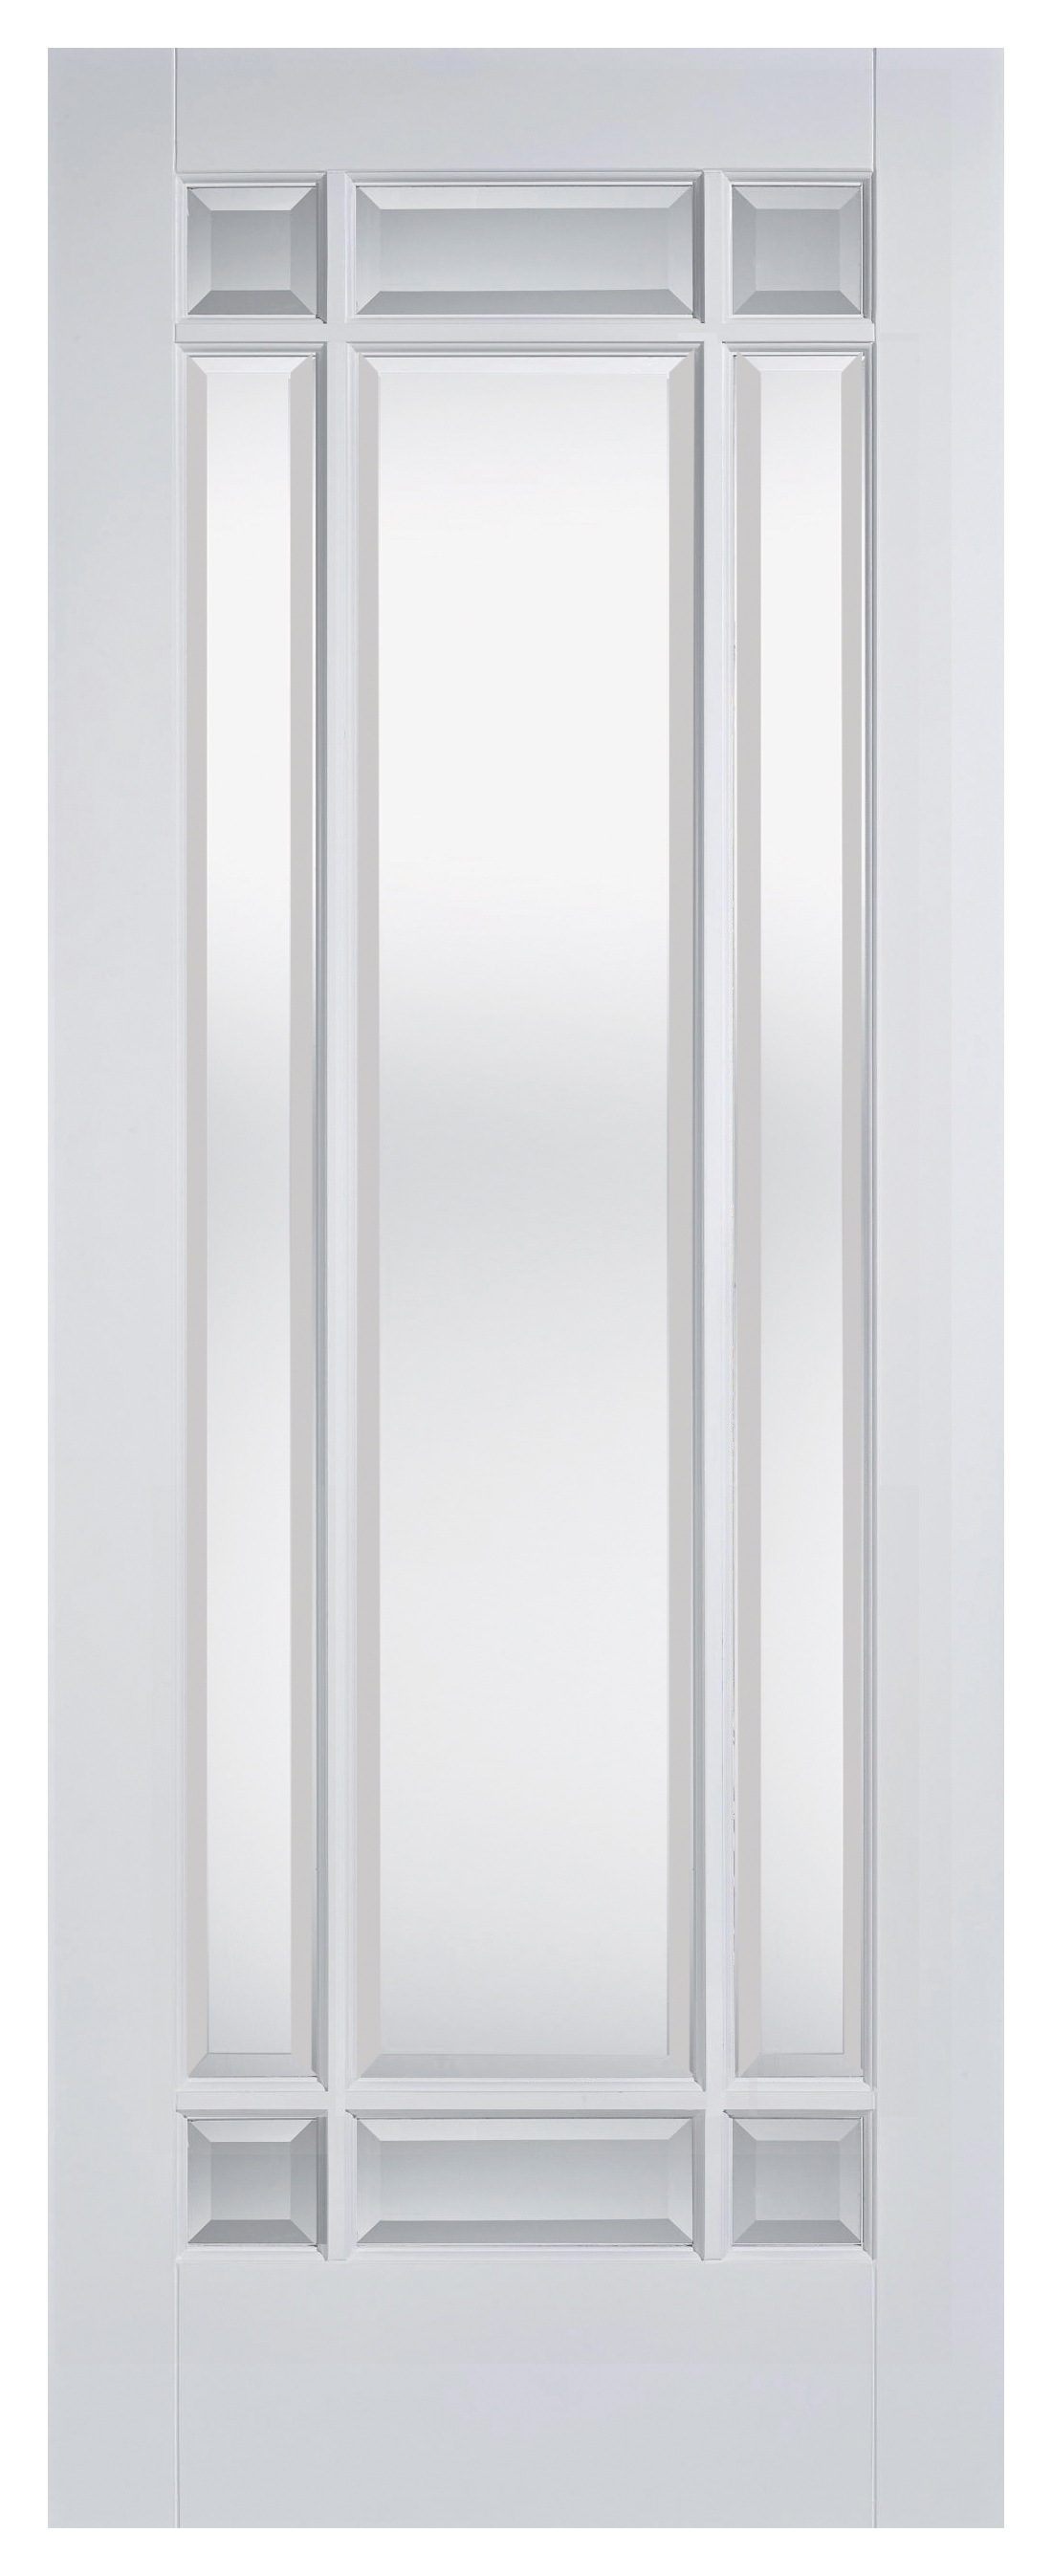 Image of LPD Internal Manhattan 9 Lite Primed White Solid Core Door - 838 x 1981mm